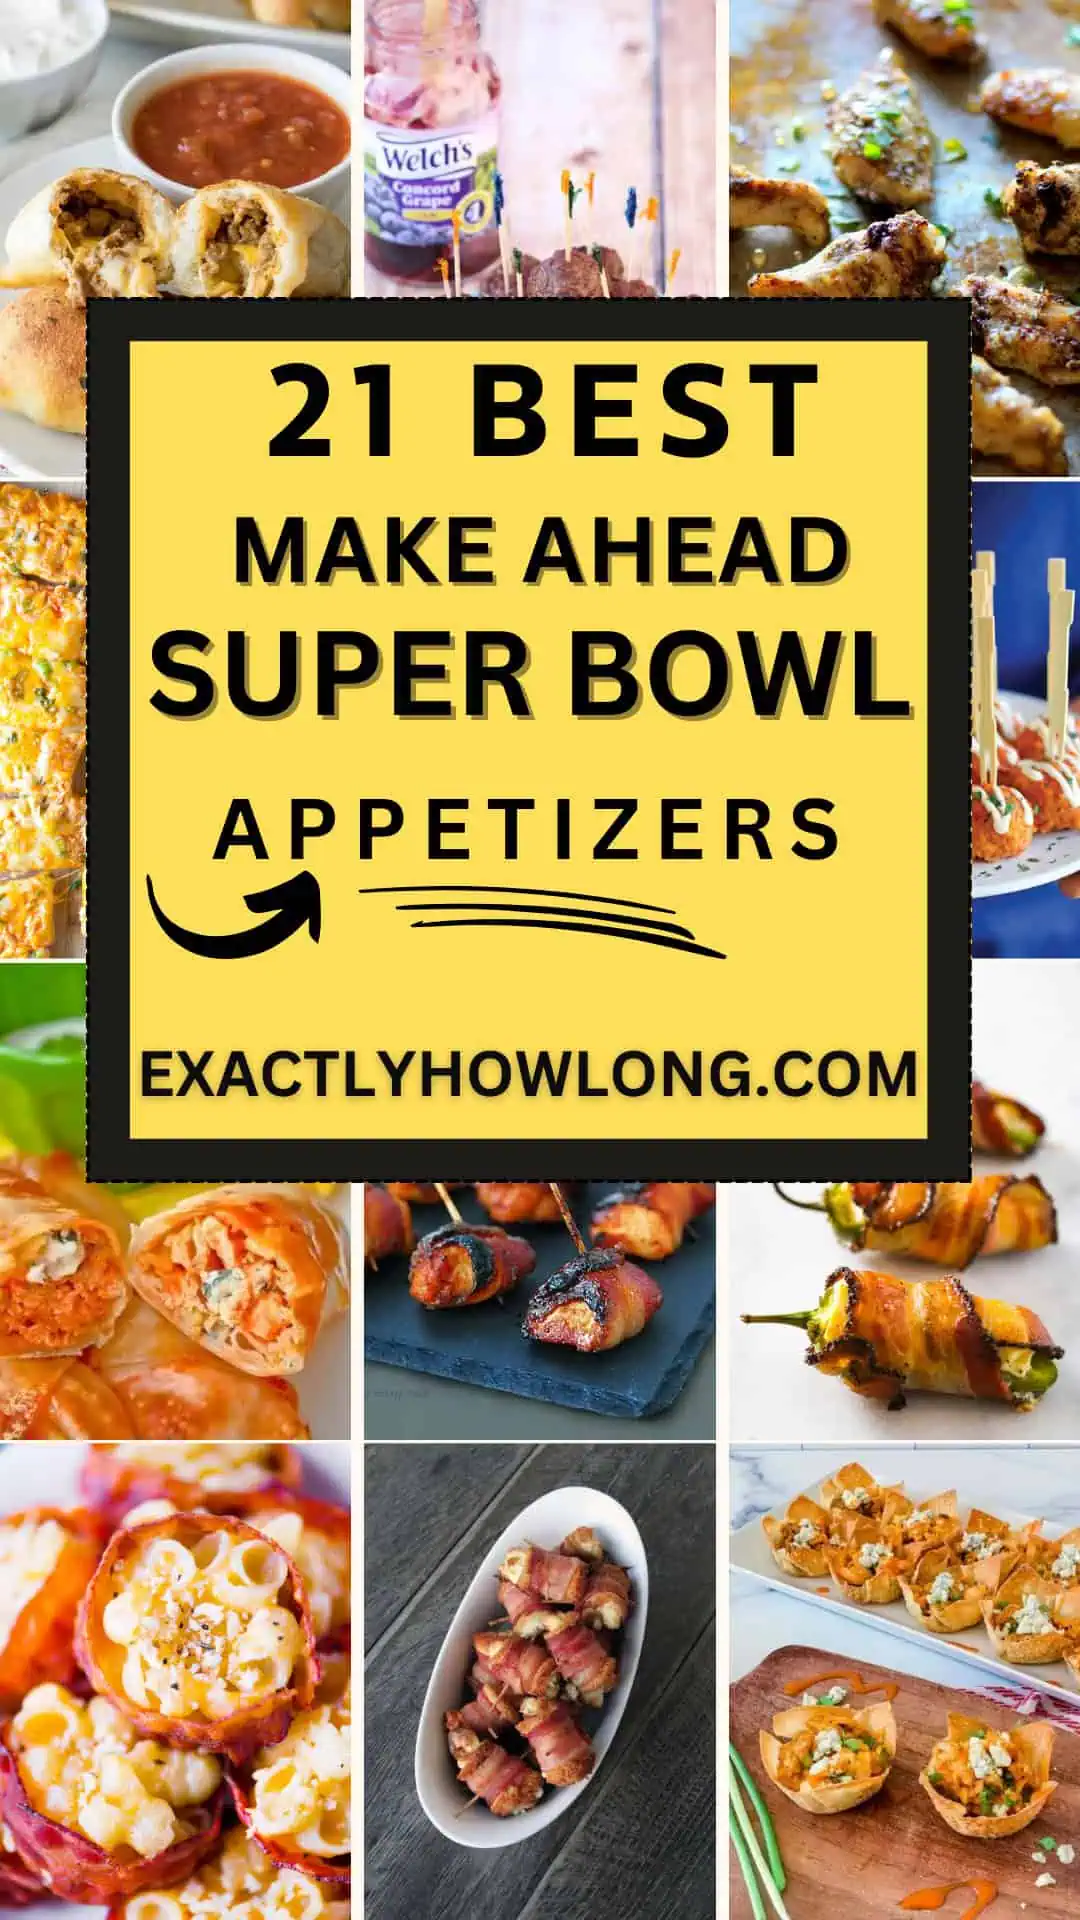 Make Ahead Super Bowl Appetizers